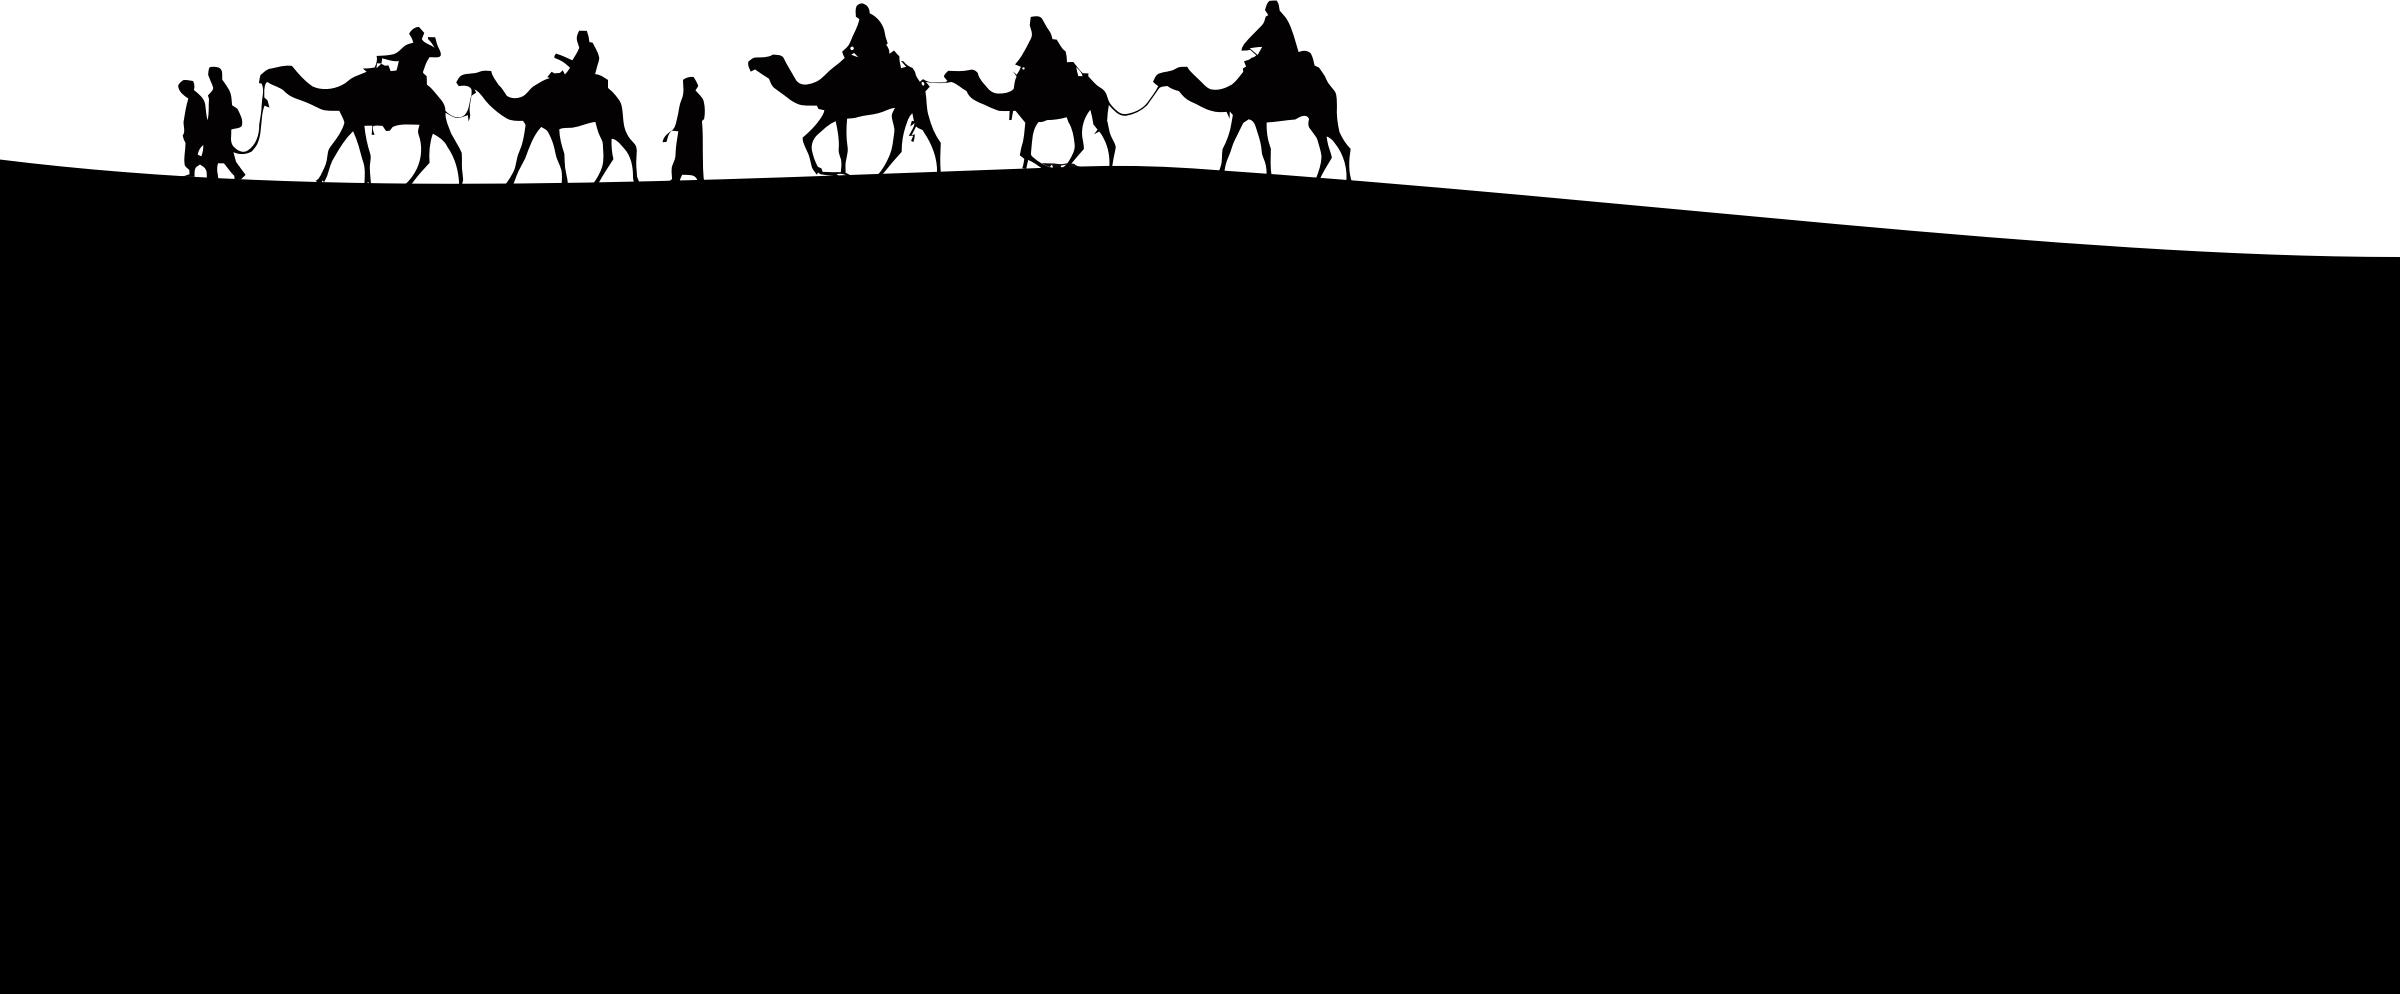 Camels Caravan Silhouette png